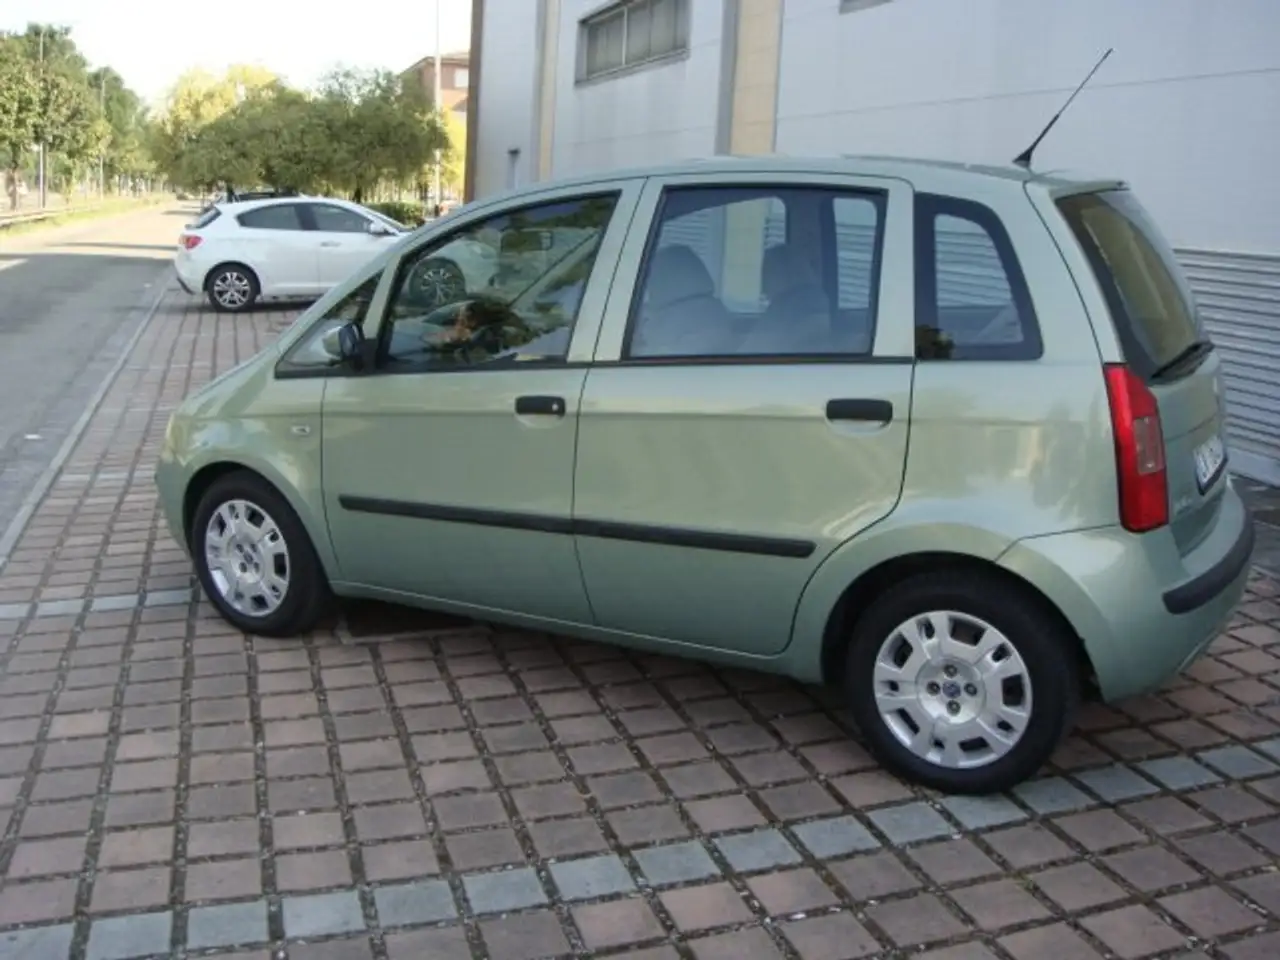 usato Fiat Idea Berlina a Carpi- Mo per € 5.800,-